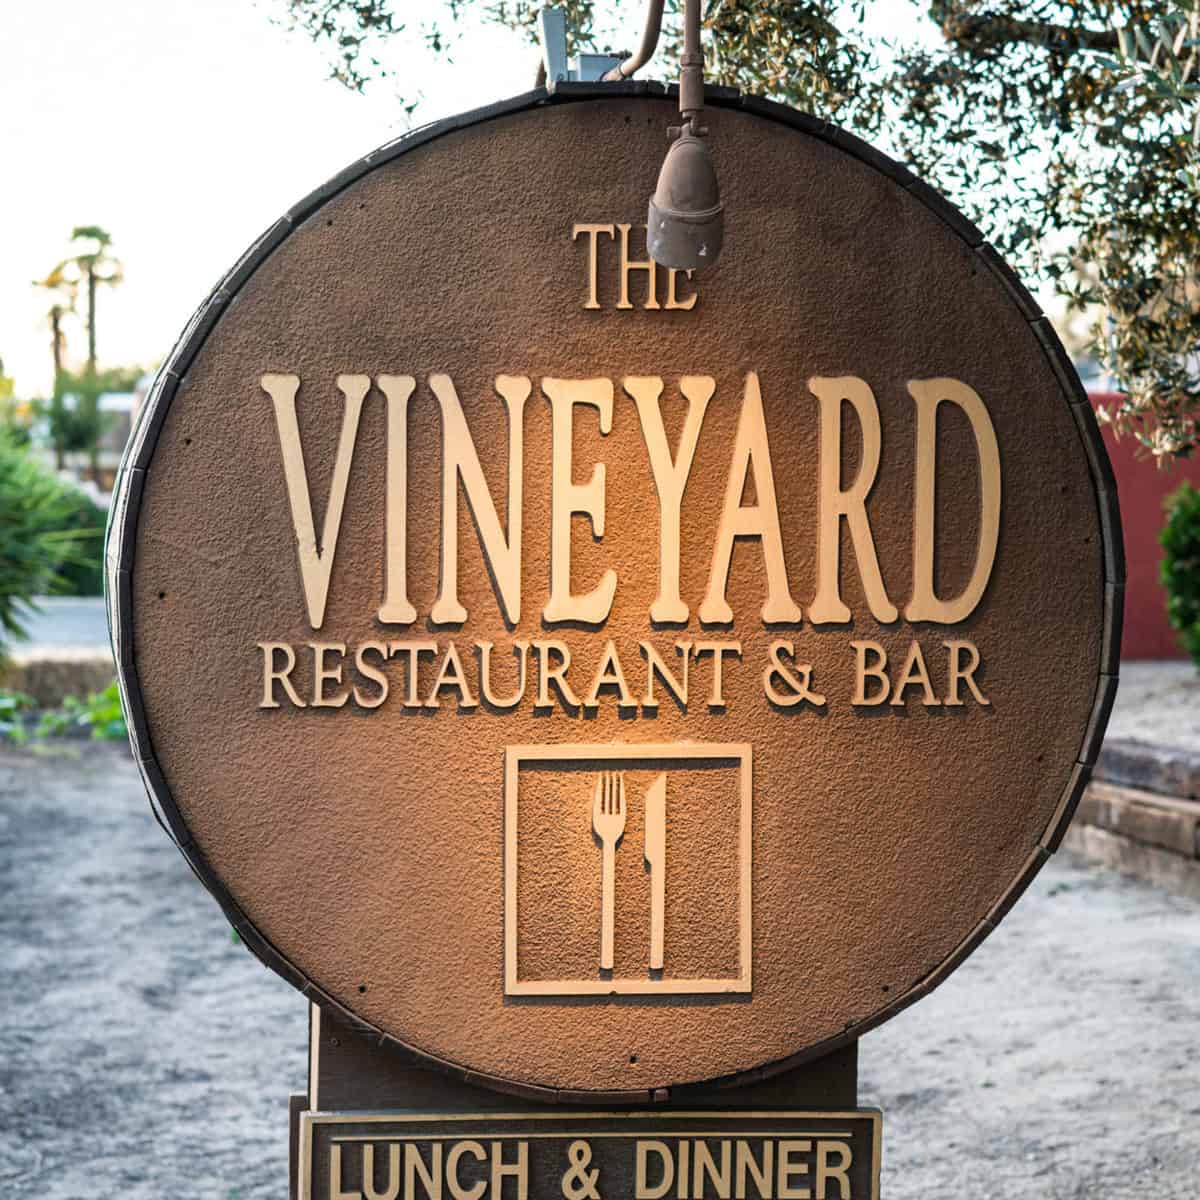 The Vineyard restaurant in Madera, CA